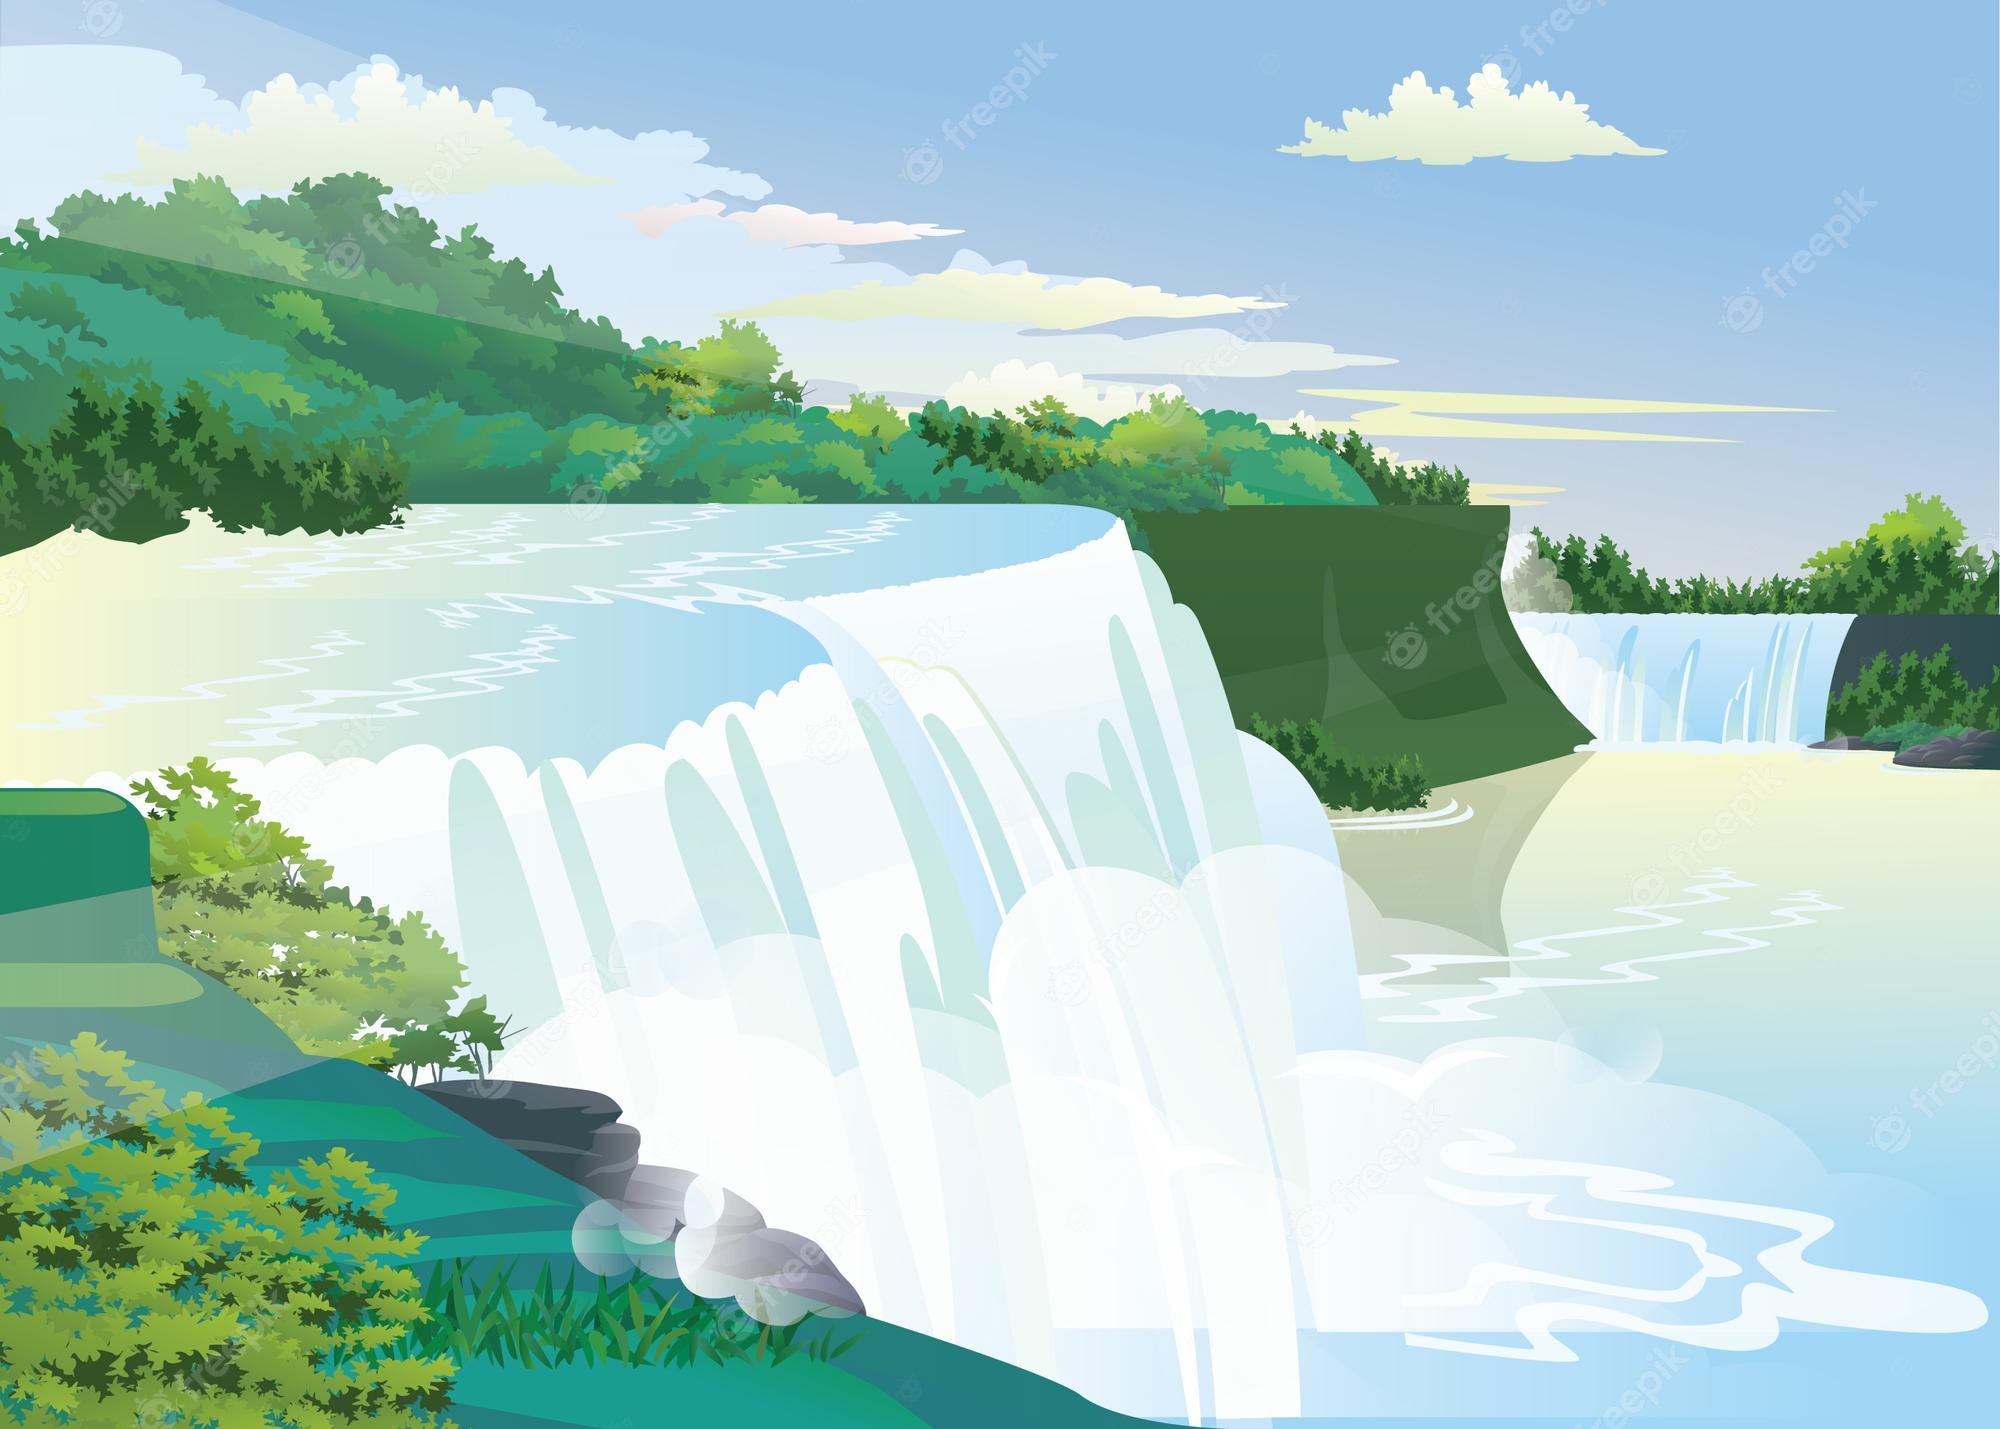 Niagara falls Vector Image - 1621126 | StockUnlimited - Clip Art Library